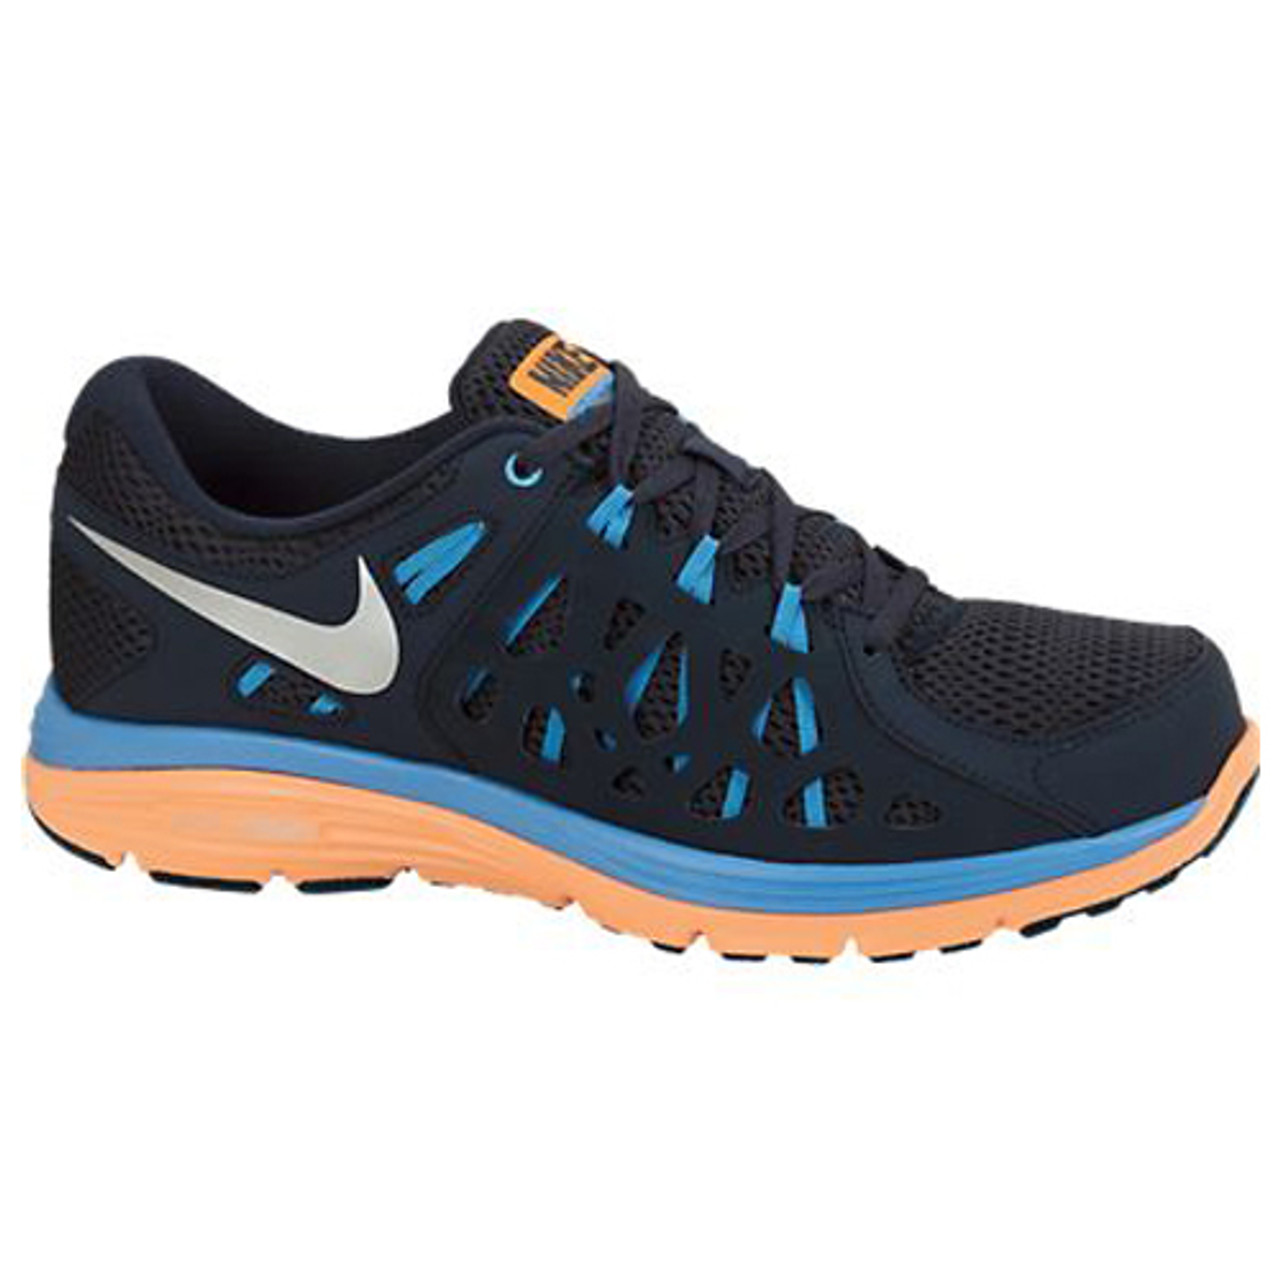 Nike Dual Fusion Run 2 Navy/Orange Mens Running - Armory Navy/Blue Hero/Orange/Silver | Discount Nike Men's Athletic & More - Shoolu.com Shoolu.com